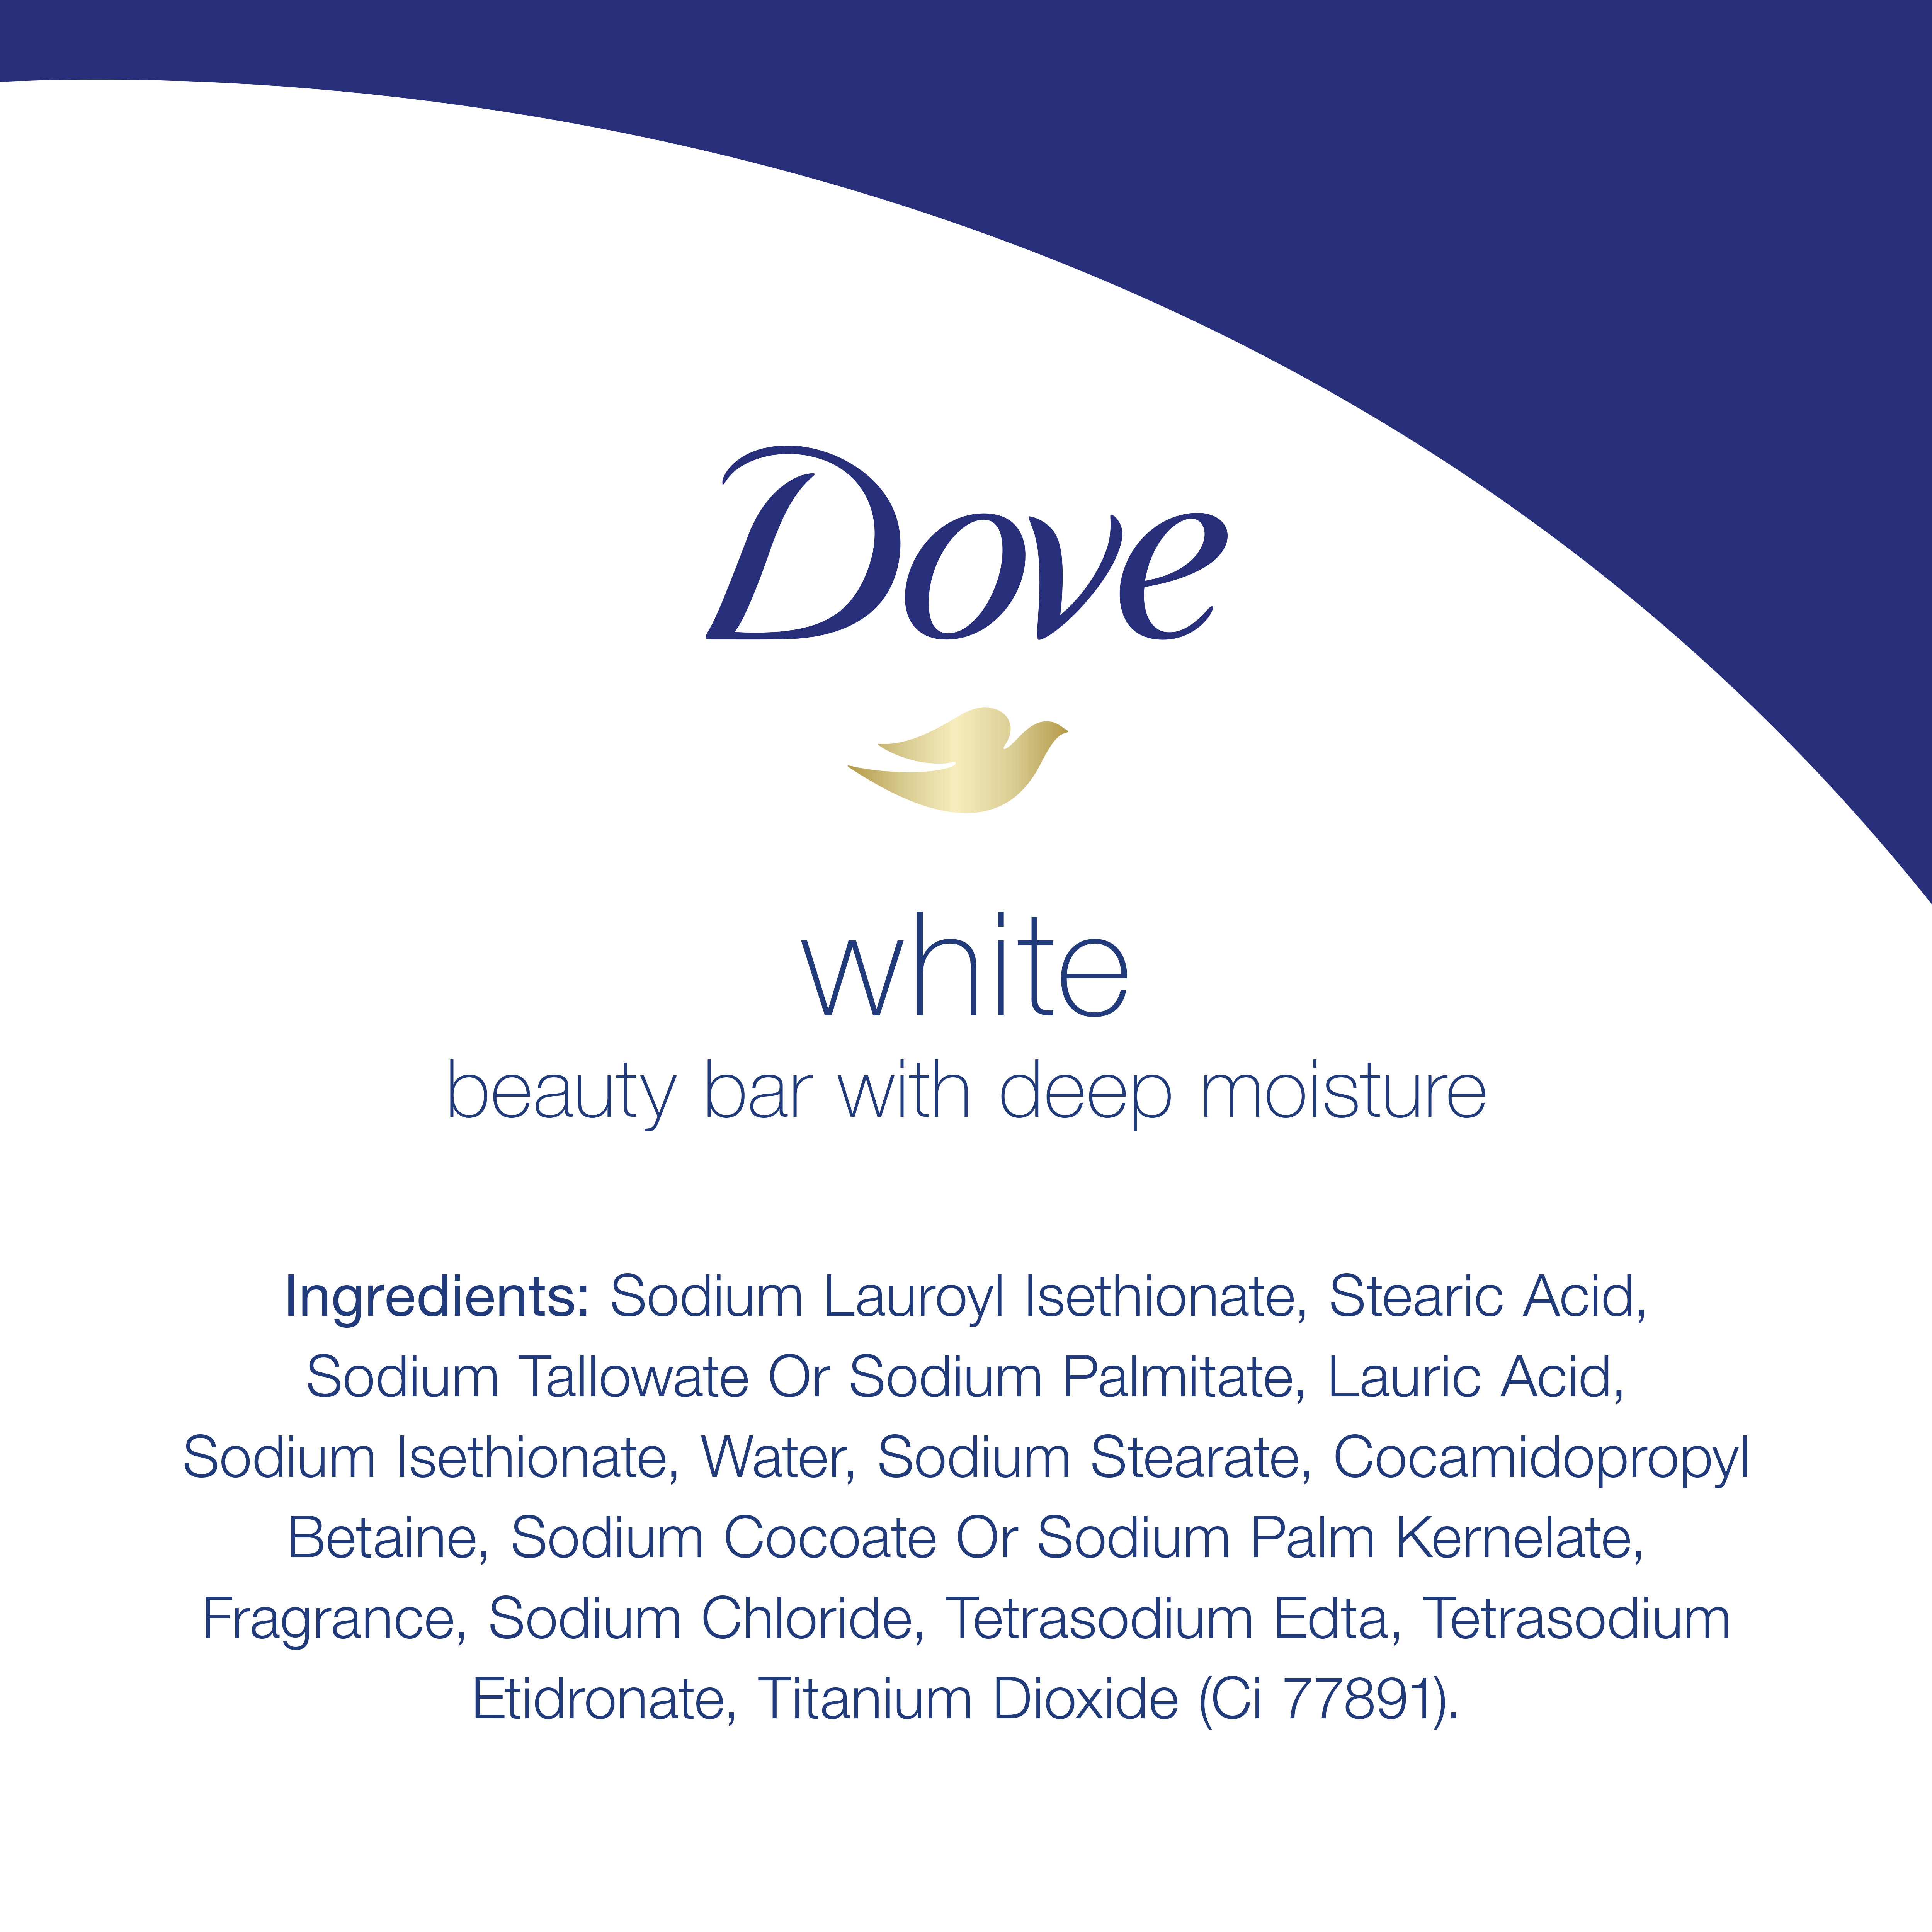 Dove Beauty Bar White 3.75 oz 10 Bars - image 9 of 9